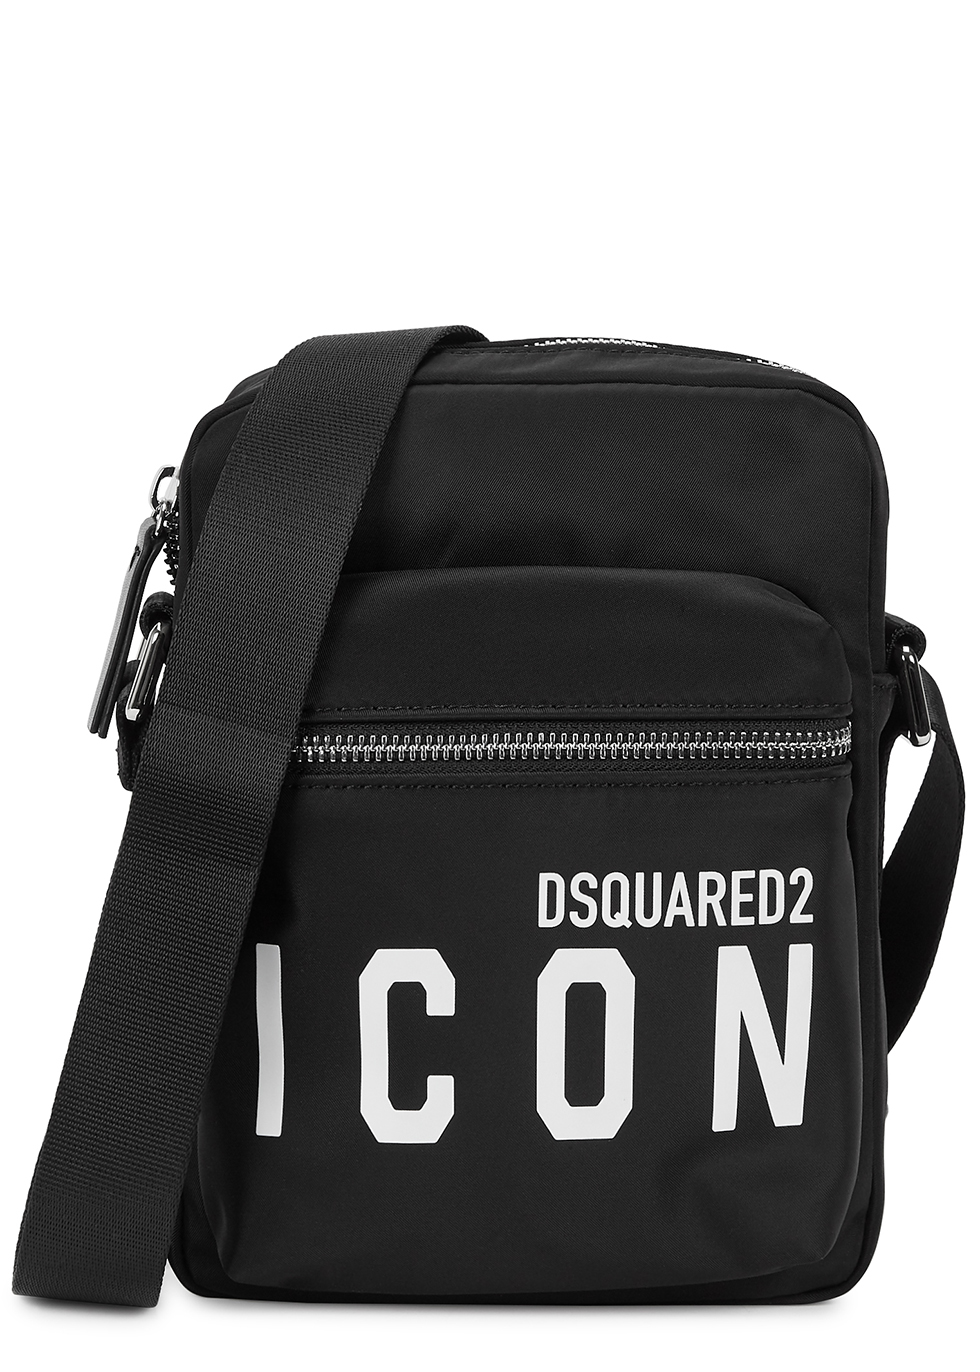 Icon black nylon cross-body bag